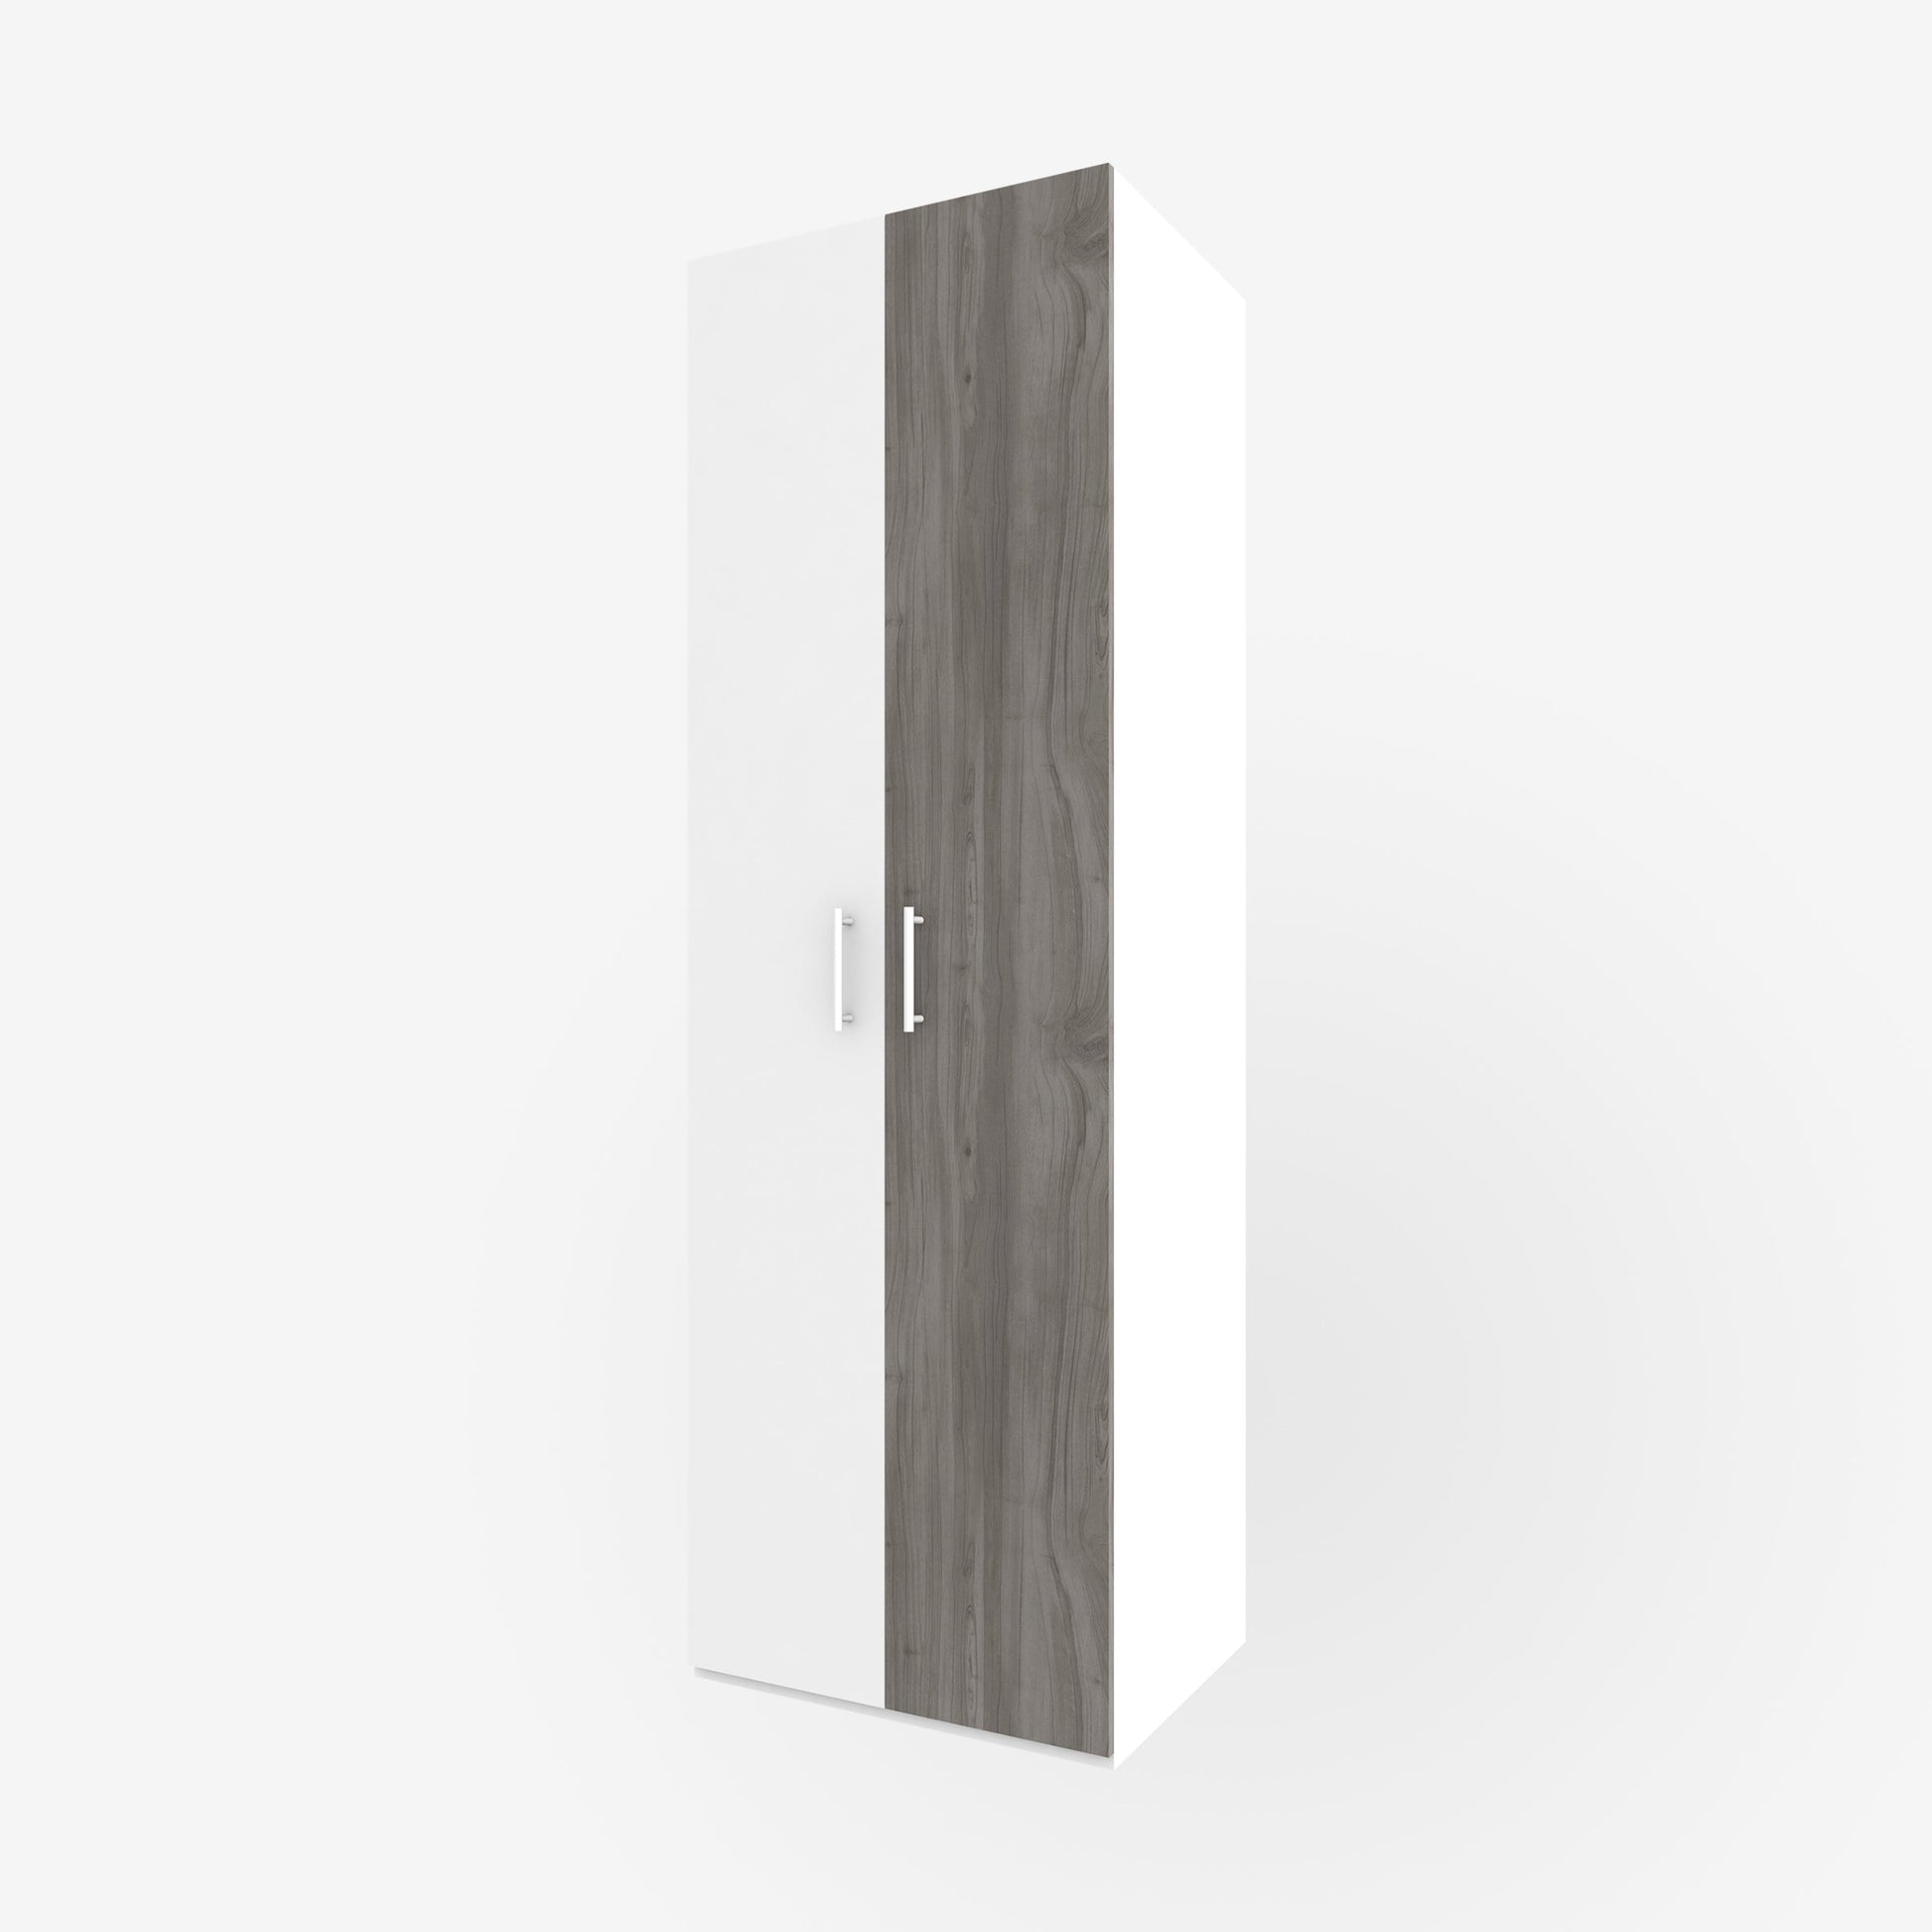 15" x 93" warm wood tone echowood slab door for Ikea or Swedeboxx pax closet cabinet